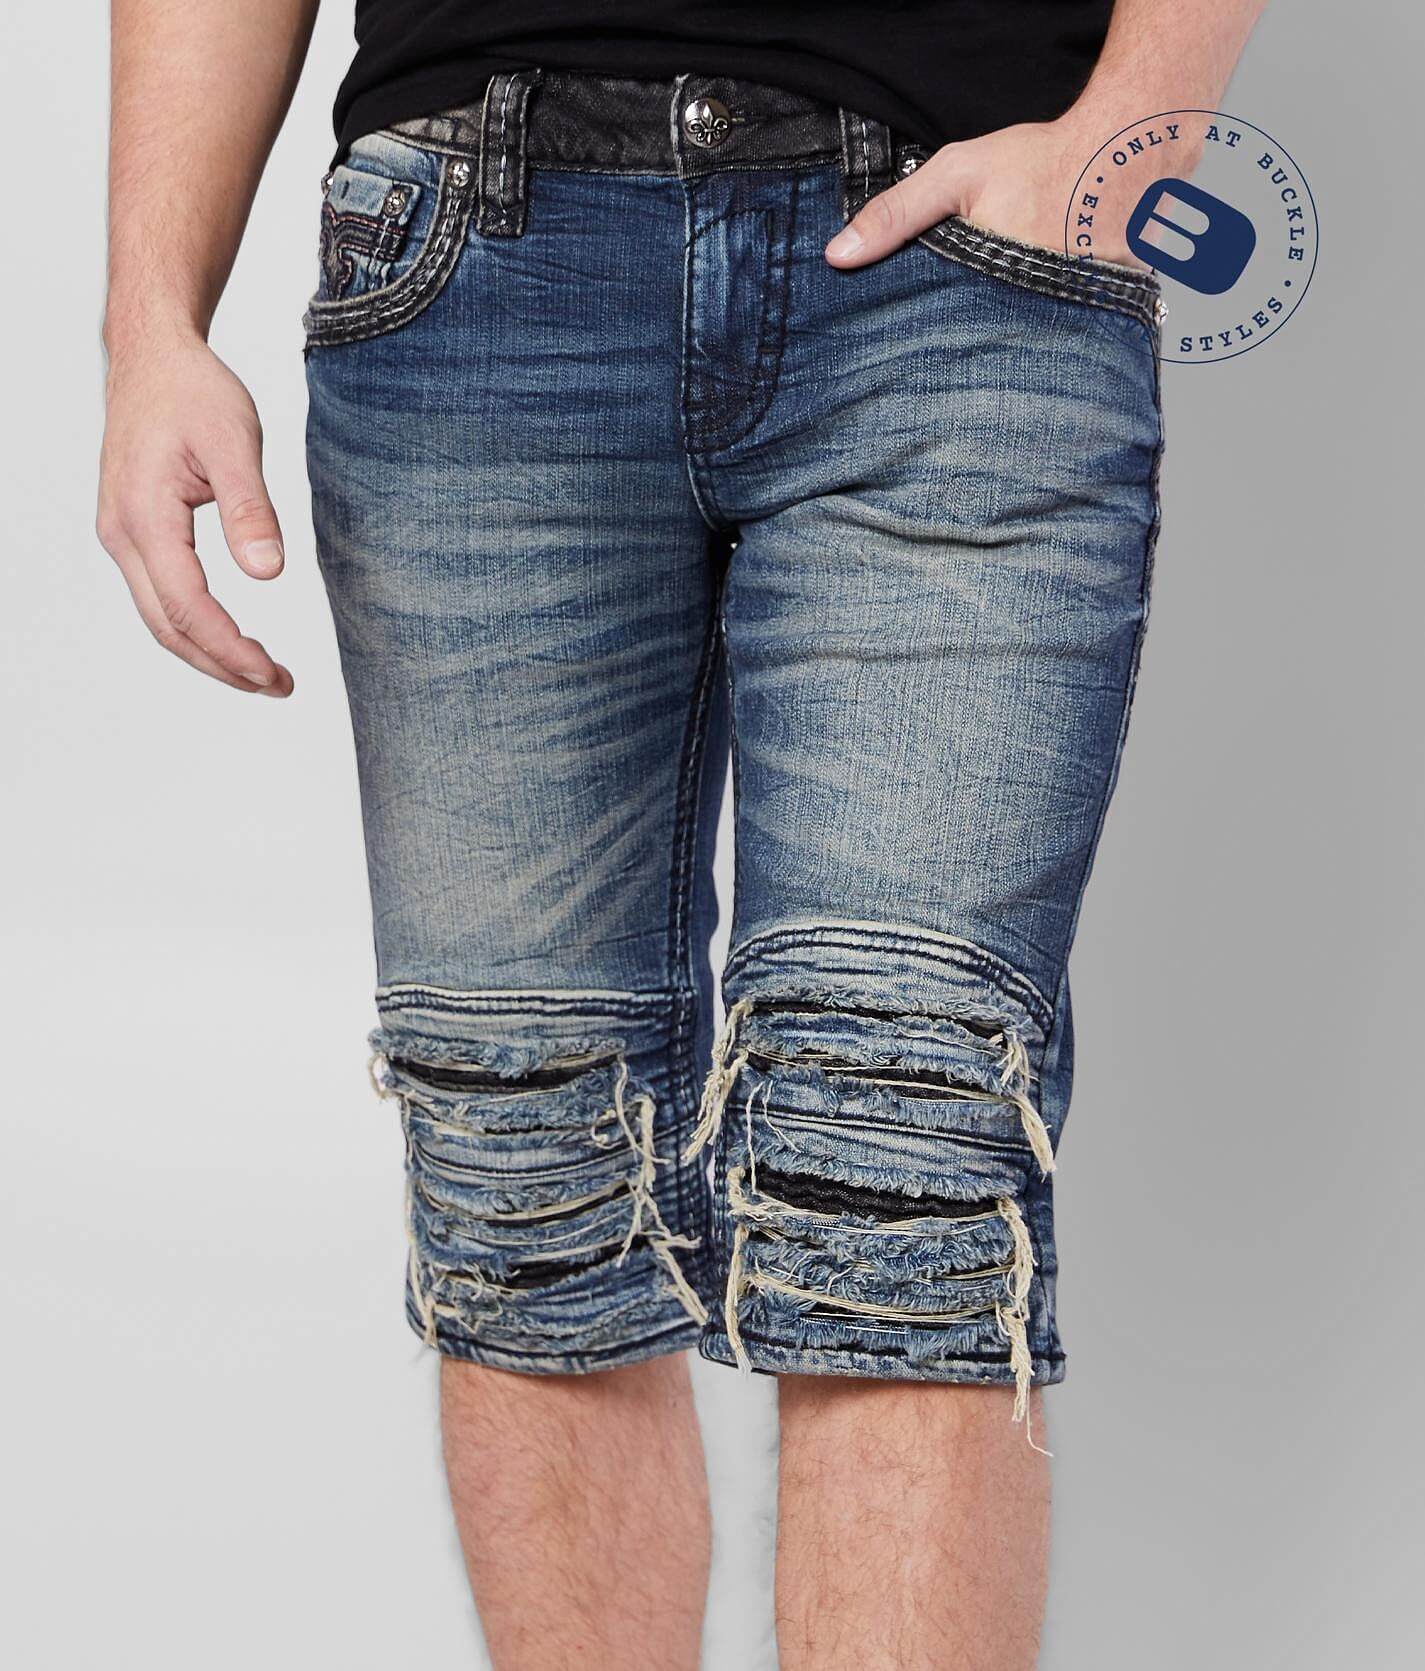 rock revival jean shorts mens